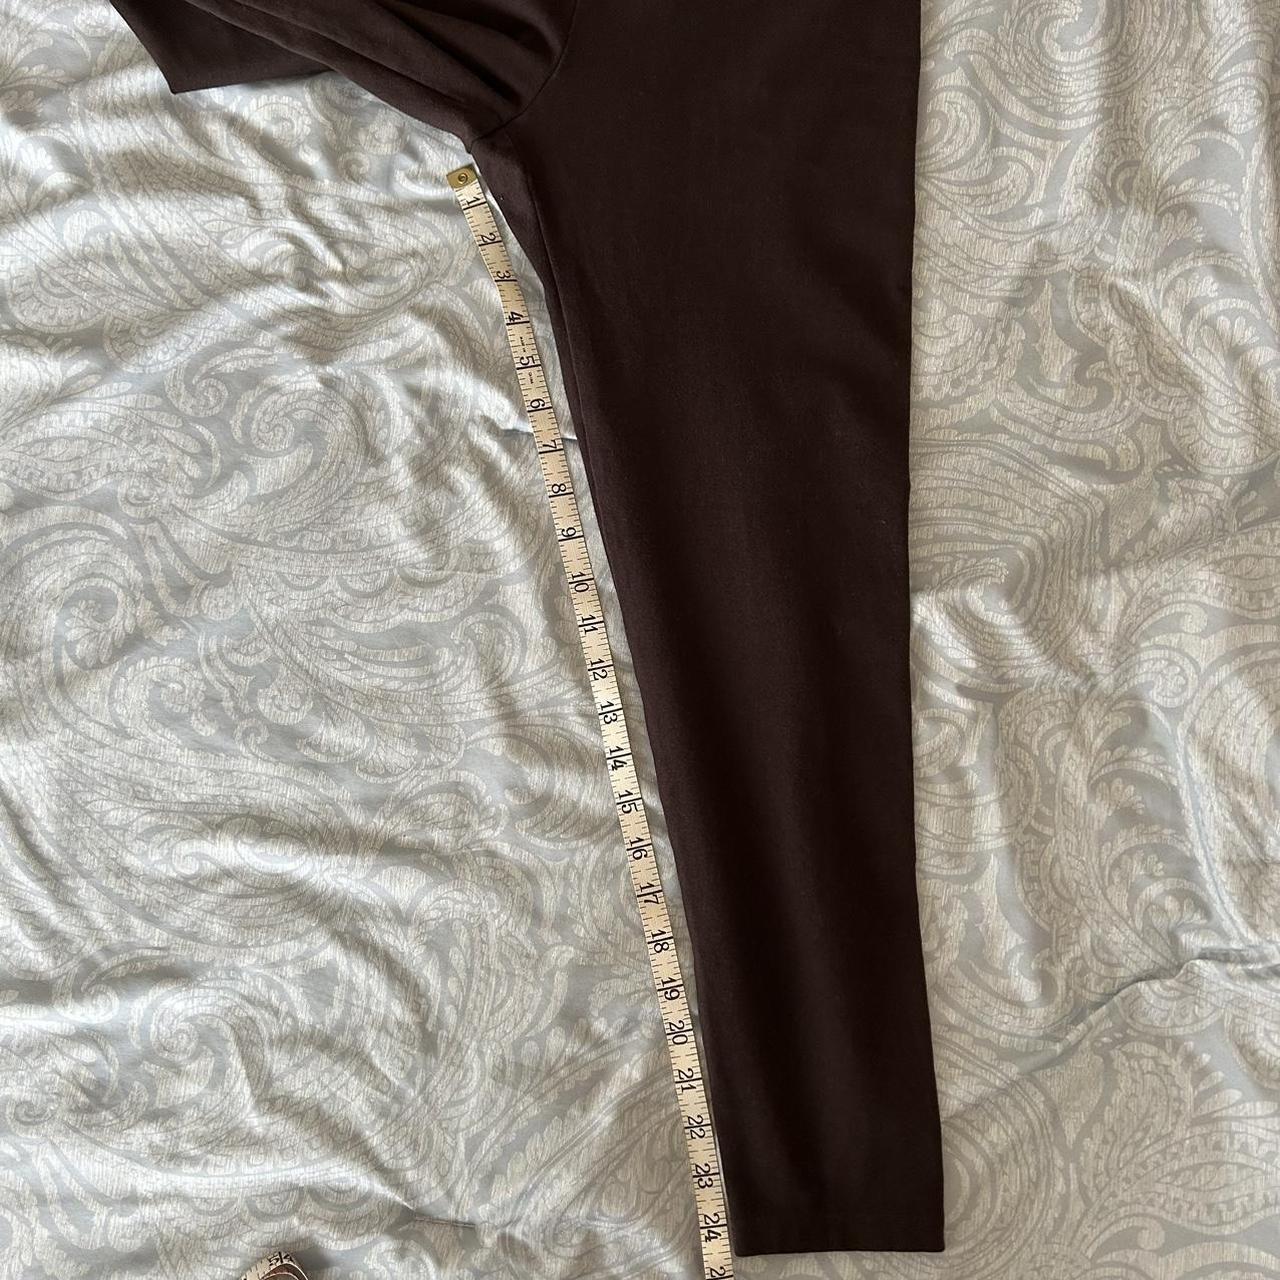 Brown leggings Tummy control waistband 14” waist - Depop